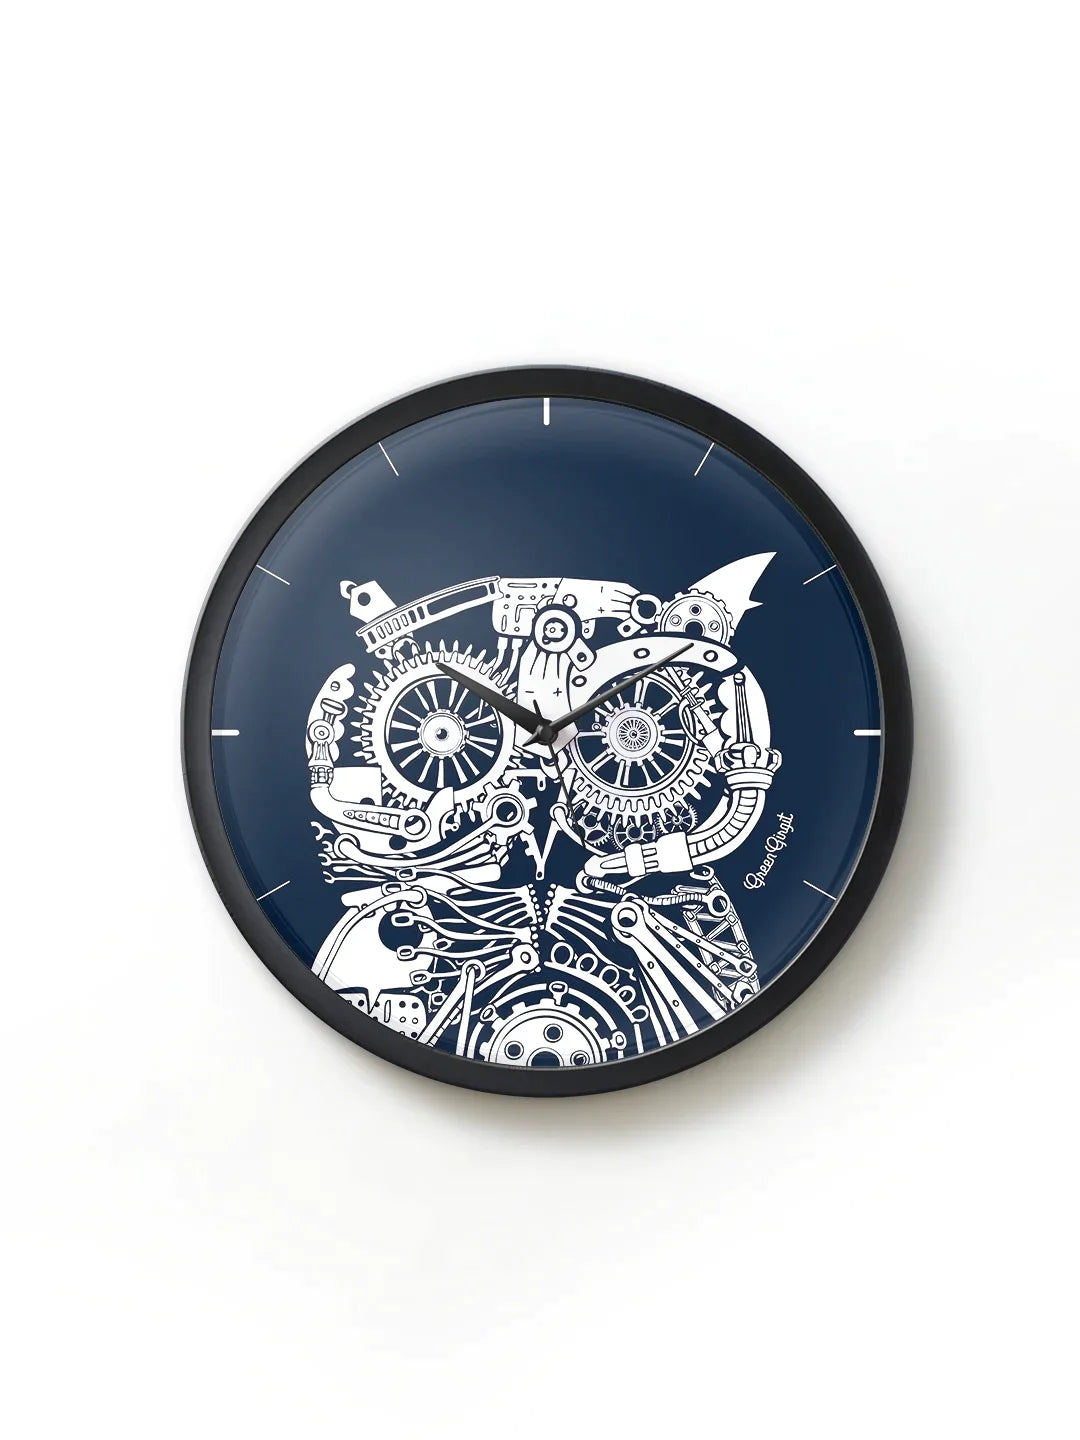 Techno owl Multicolor 13.5 Inch Plastic Analog Wall Clock